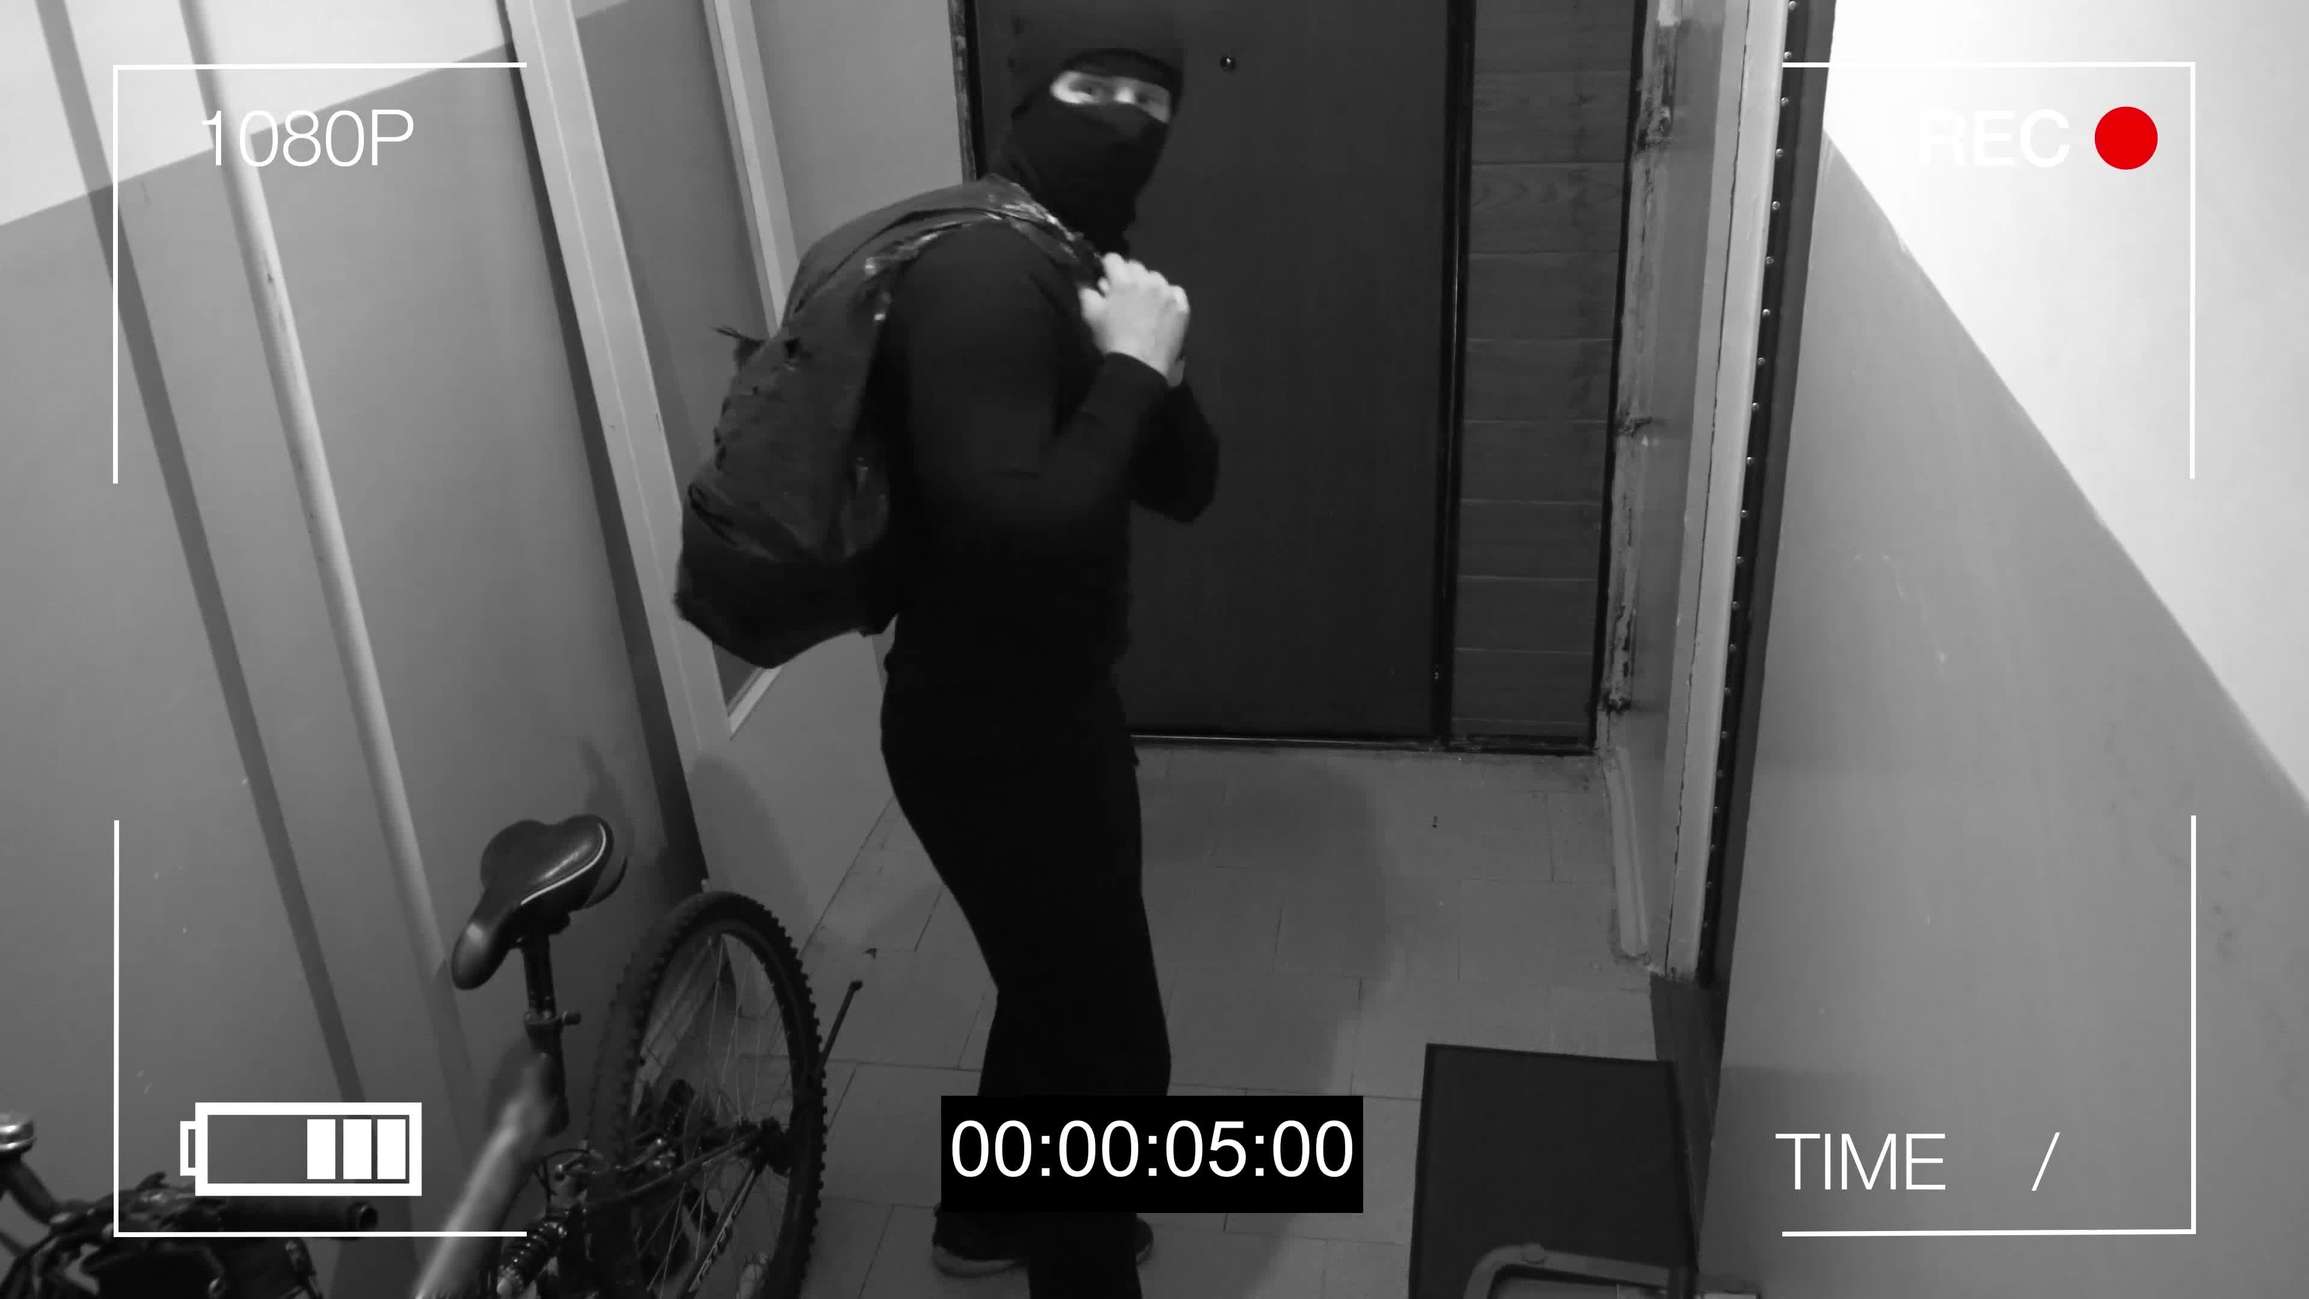 robbery on surveillance video